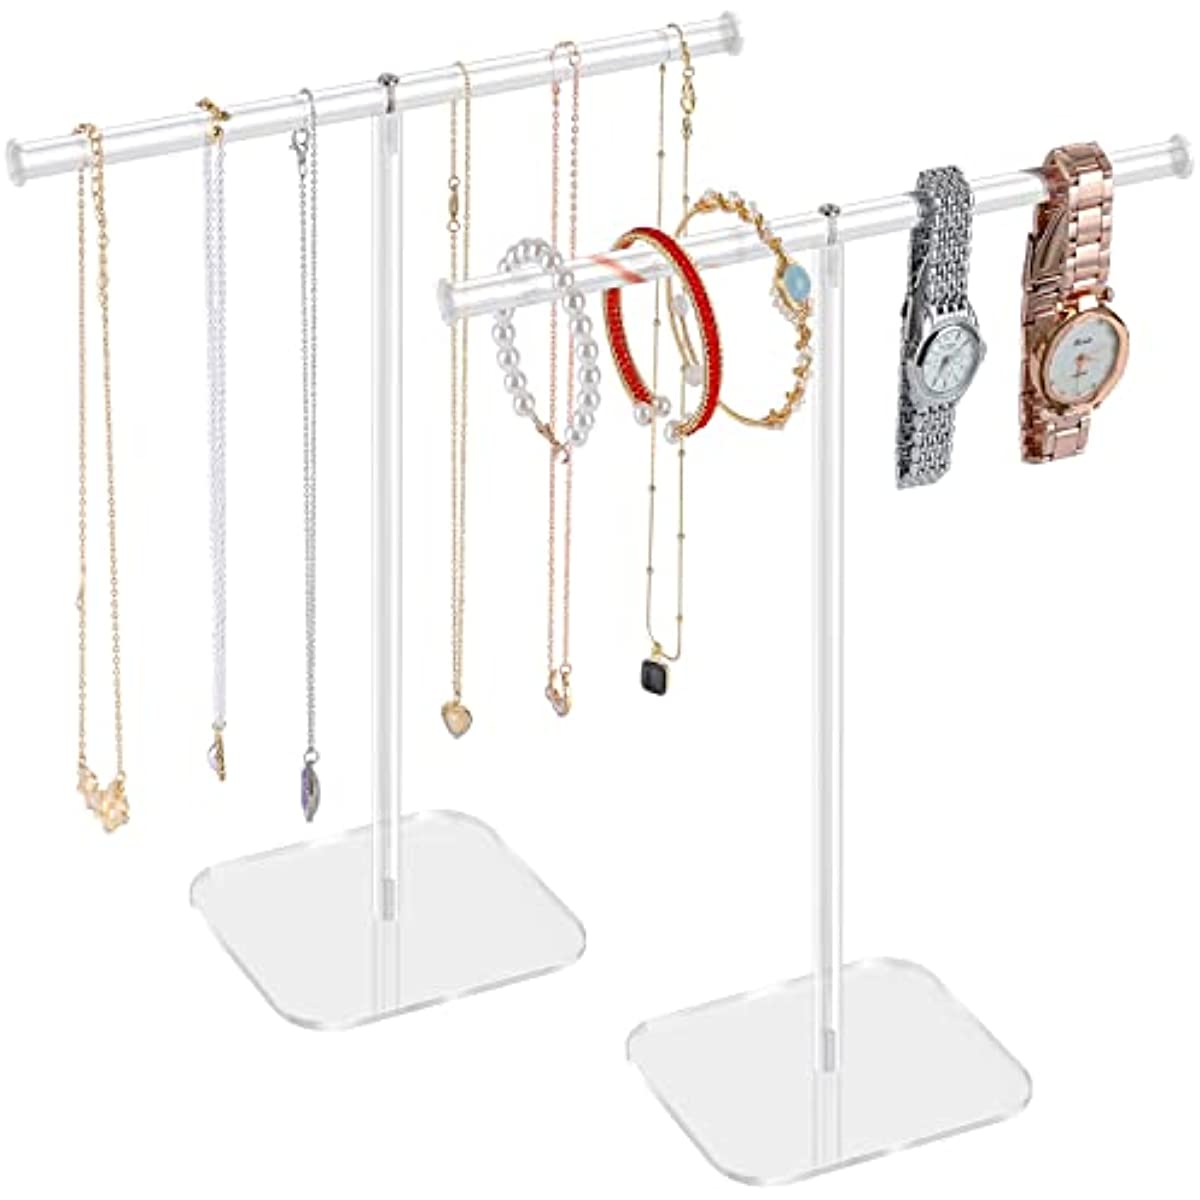 Acrylic Jewelry Rack Clear Jewelry Holder Stand